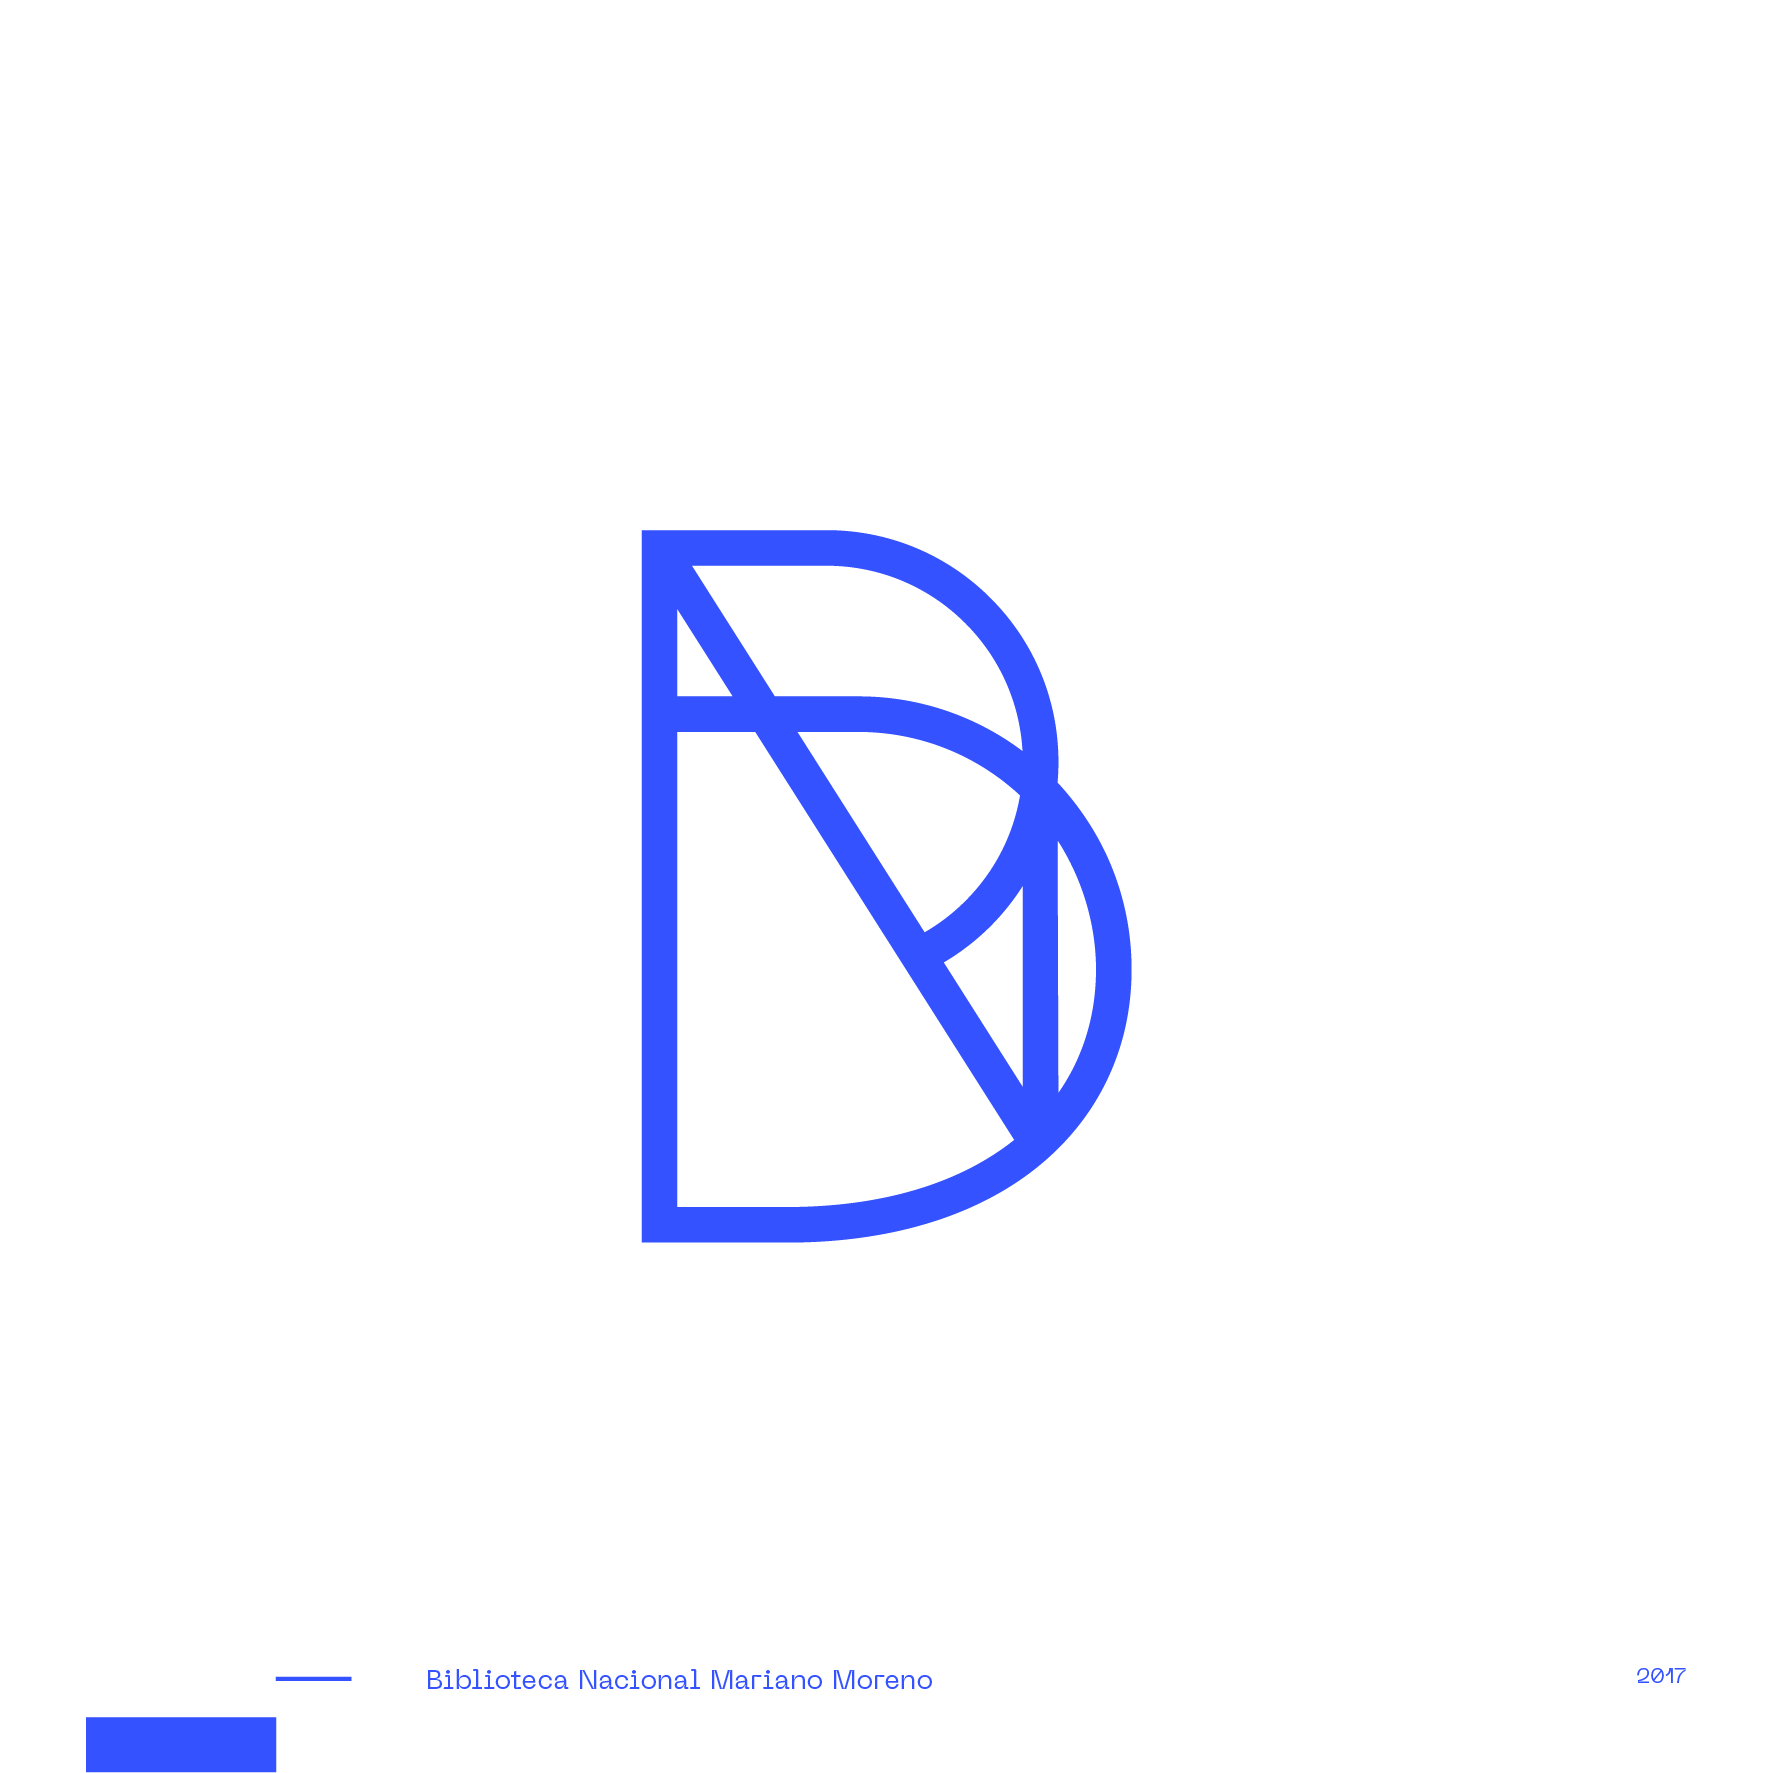 Guapo_Design_Studio_Logotype_Collection_Biblioteca-Nacional